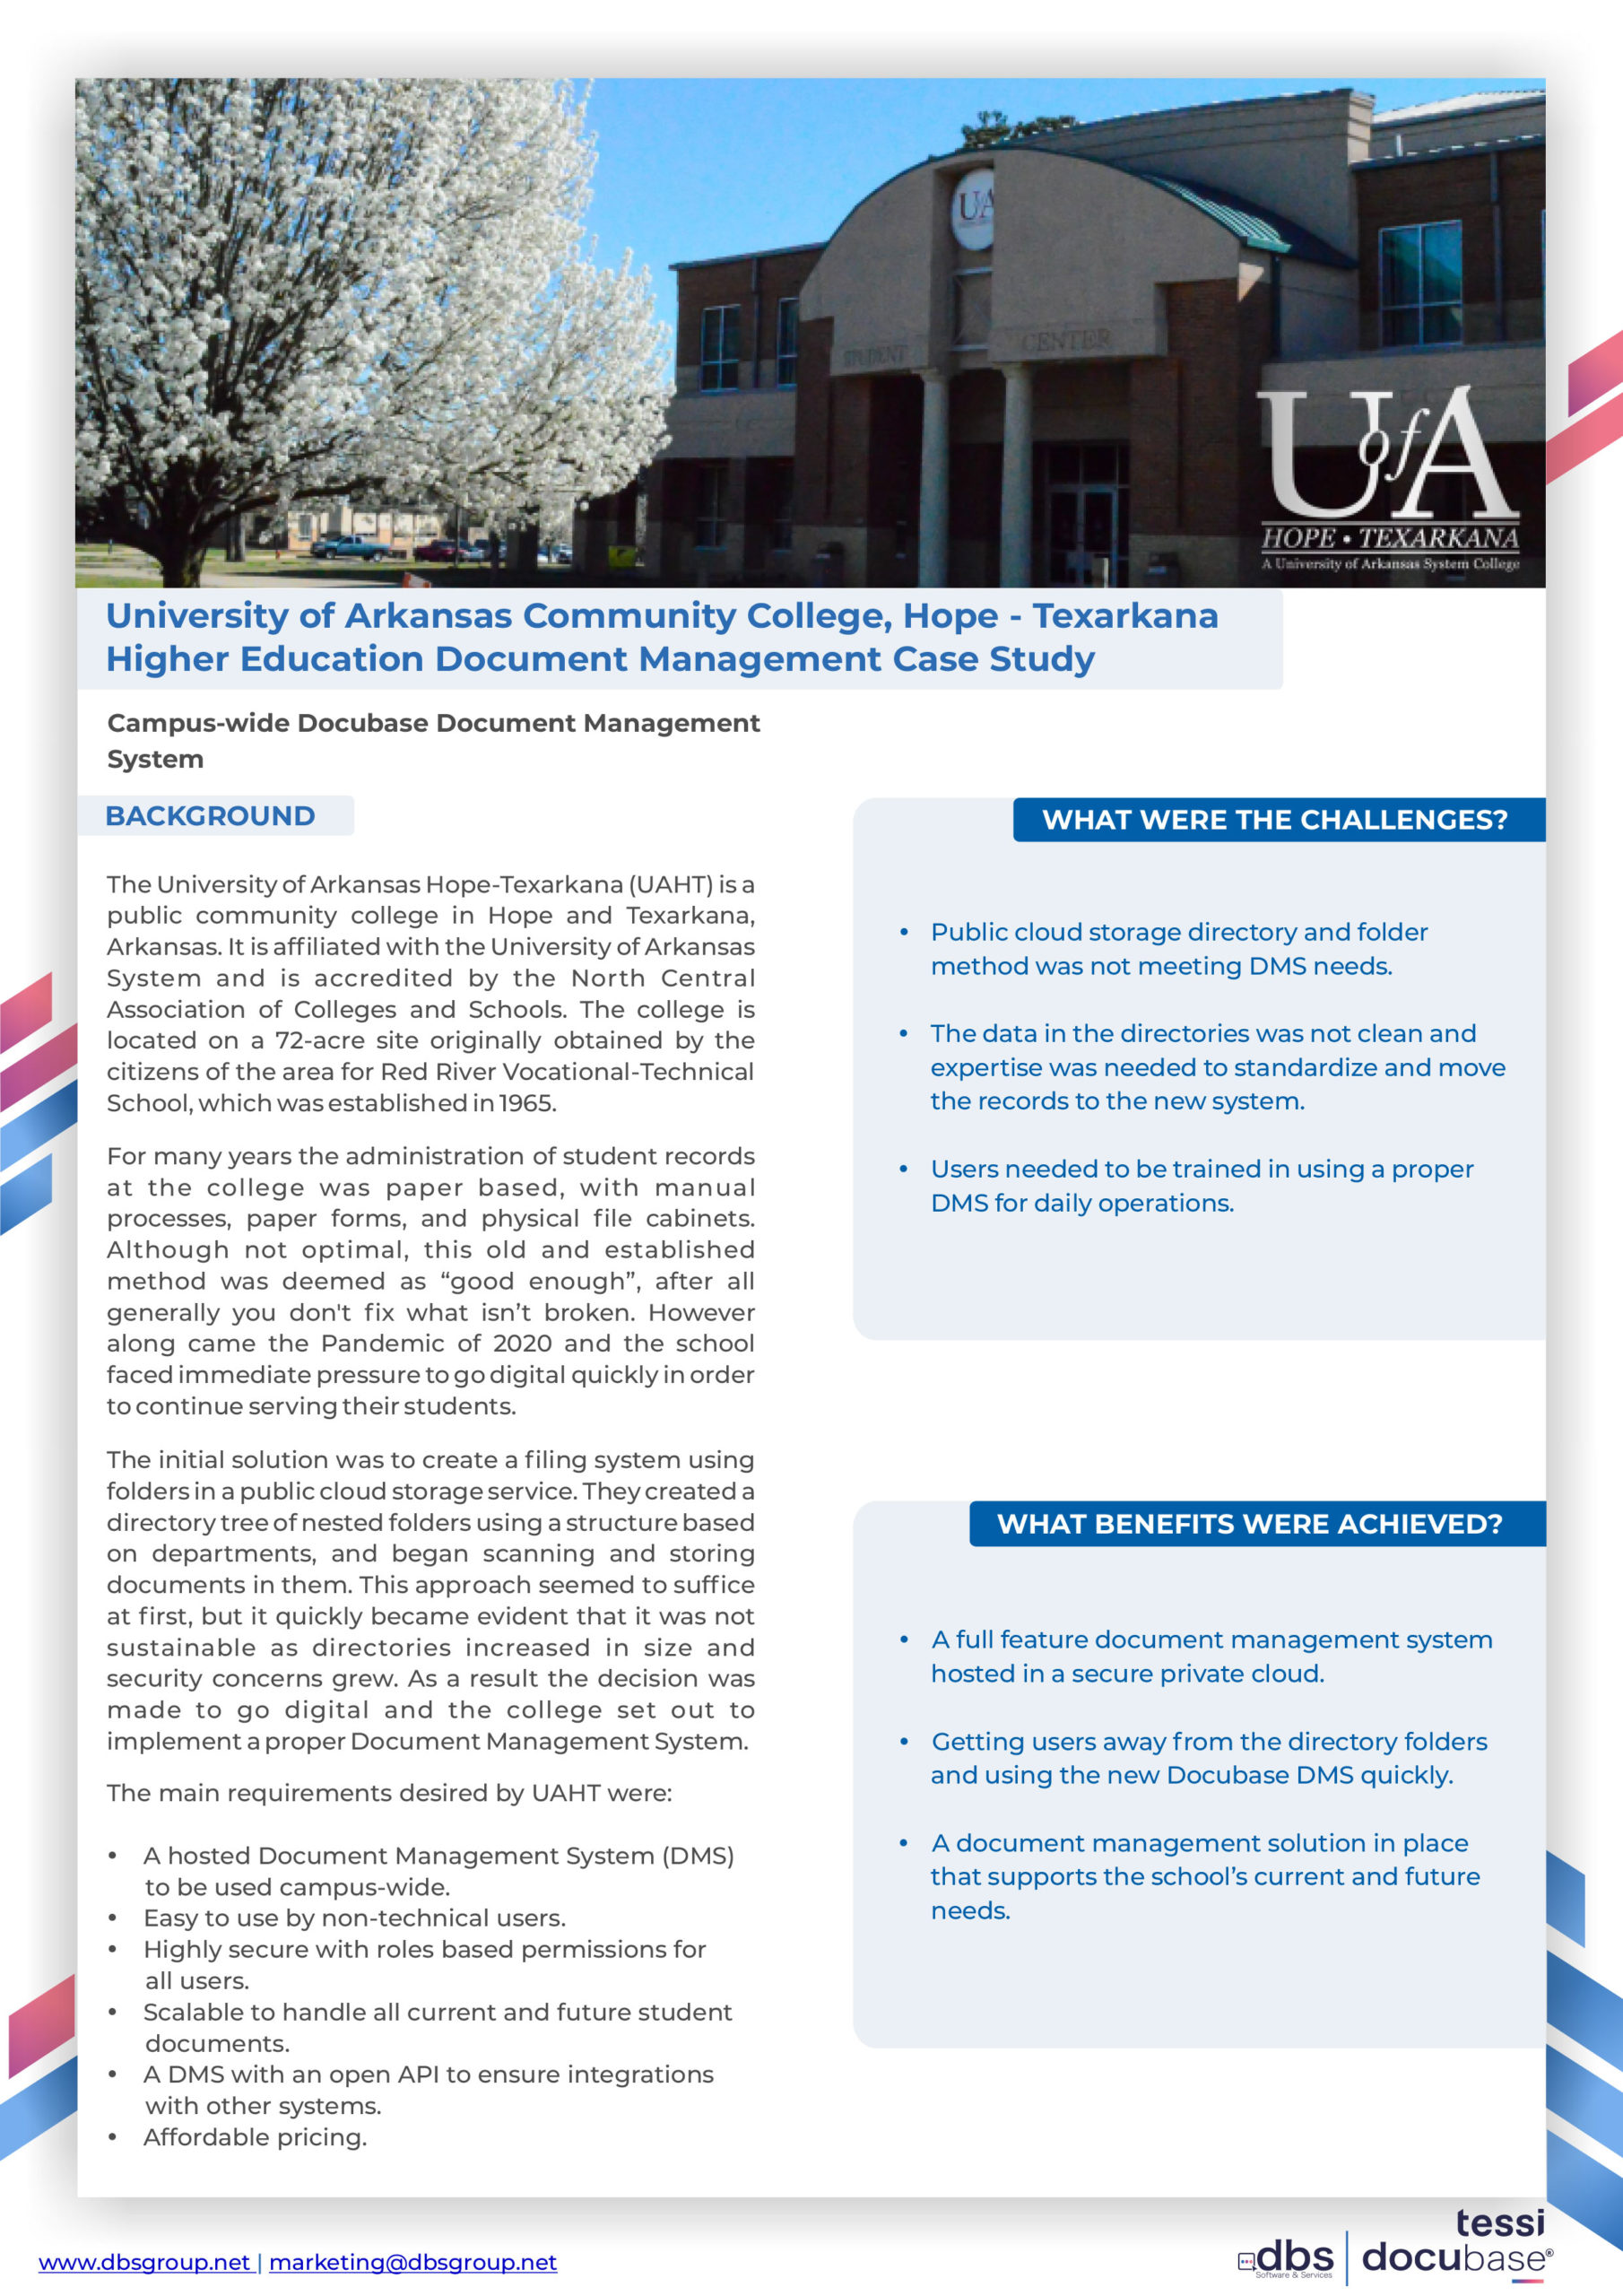 University of Arkansas Community College, Hope – Texarkana, Higher Education Document Management Case Study